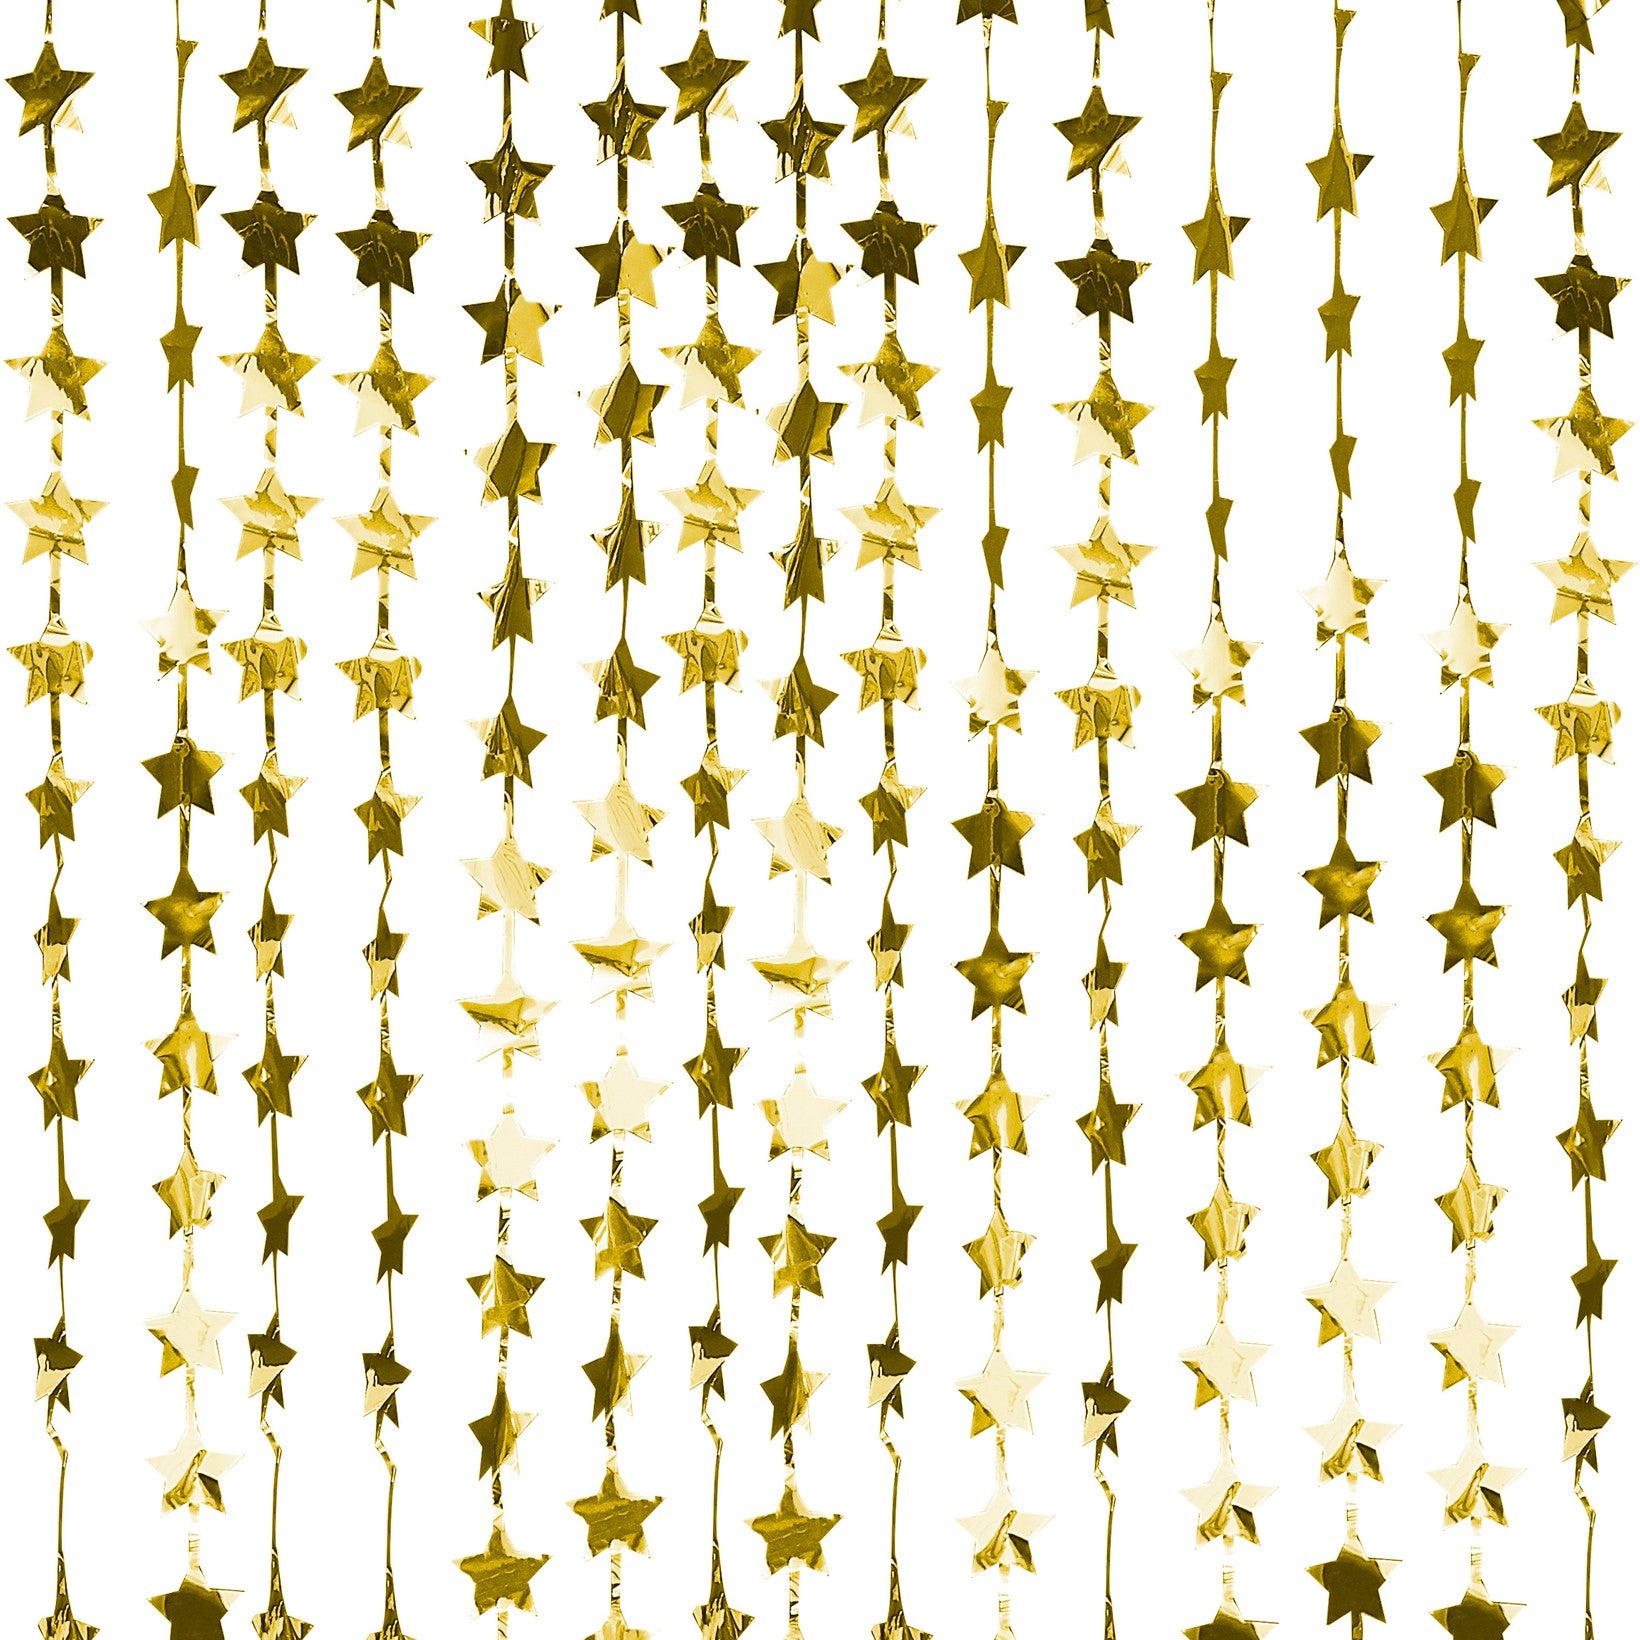 Curtain of stars 2 x 1.2 m